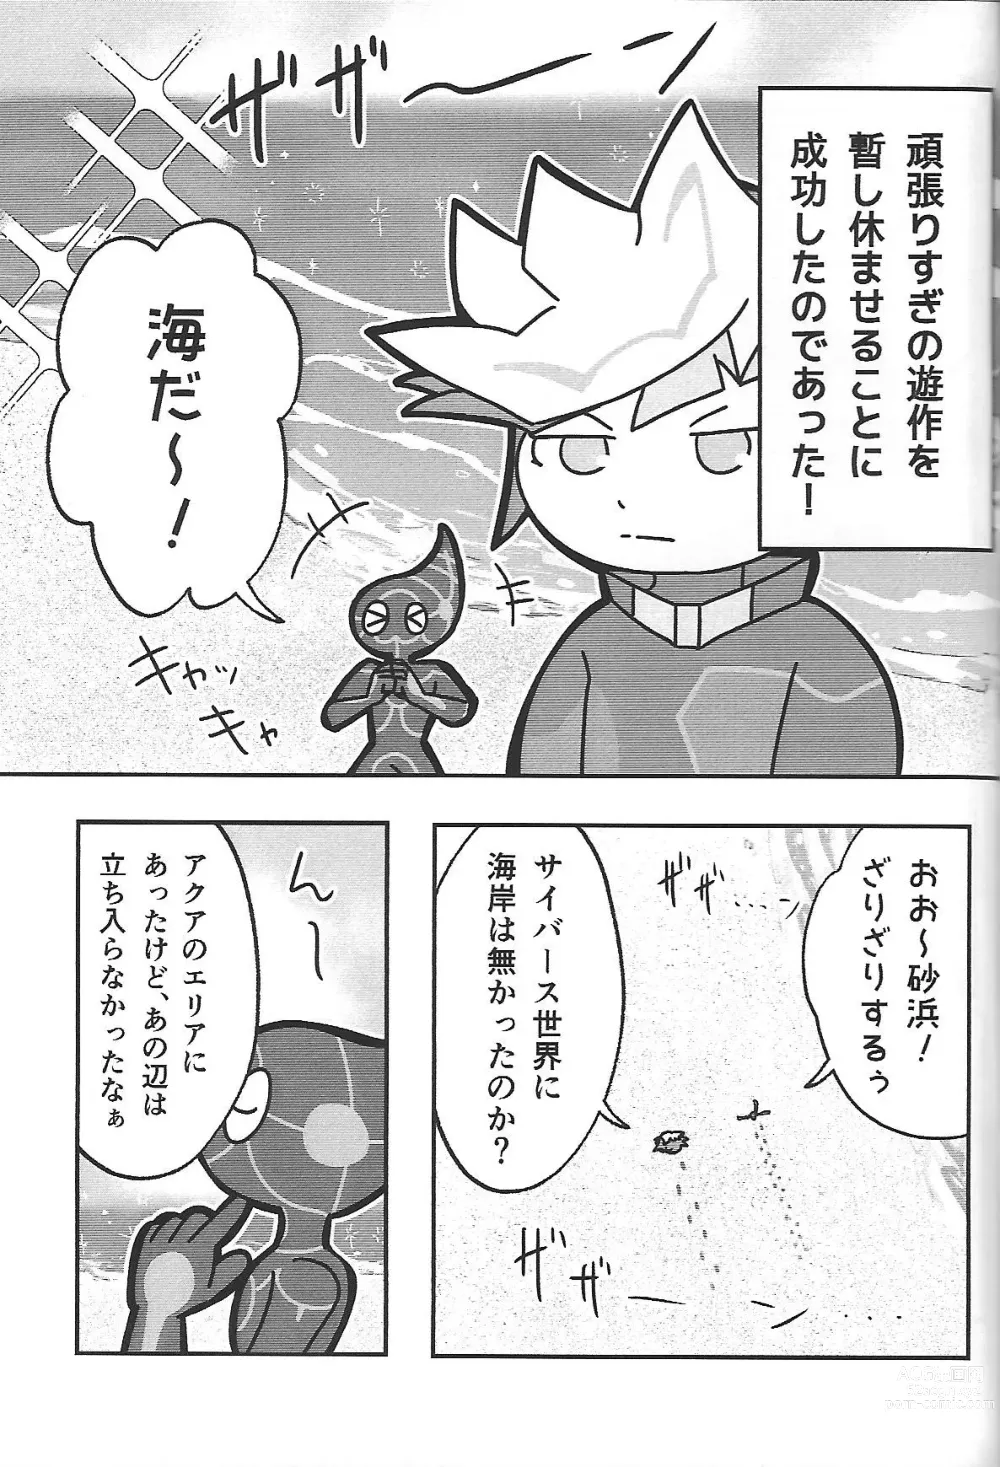 Page 14 of doujinshi Sou hito kikai